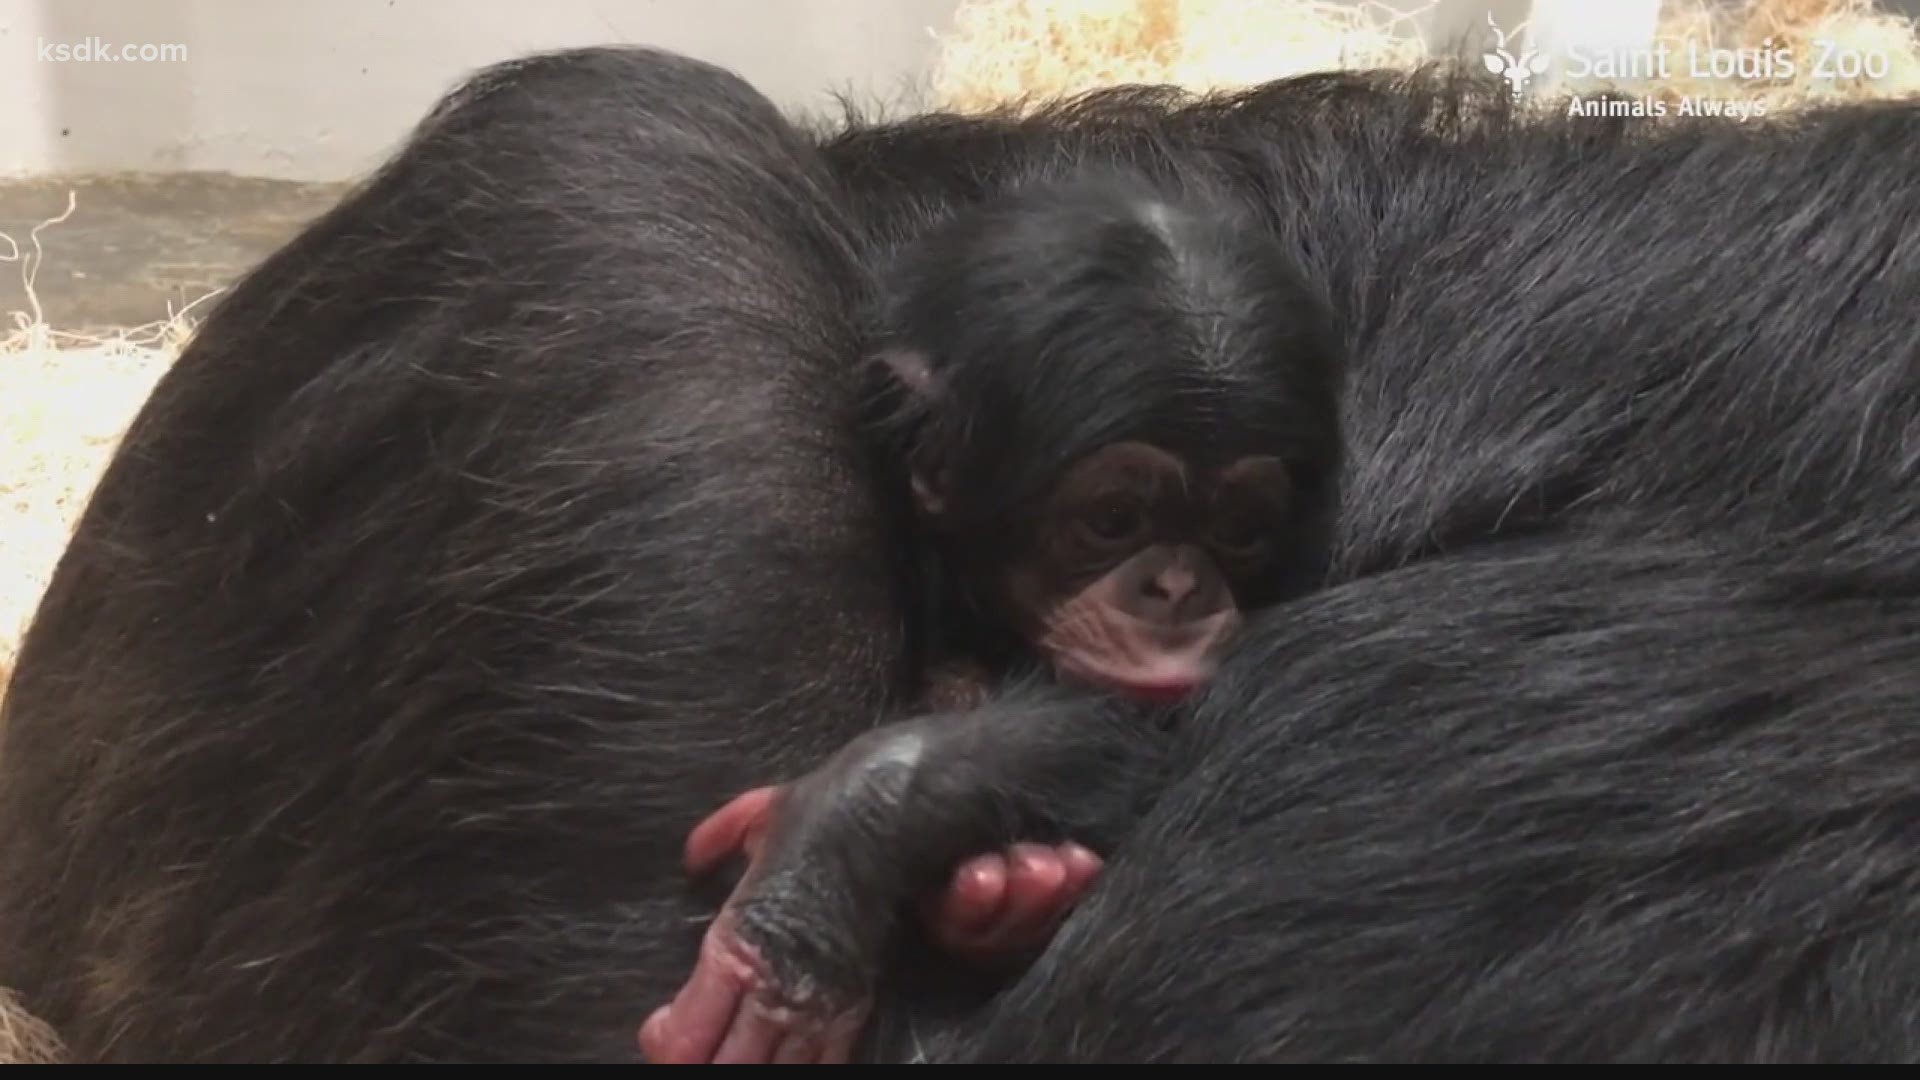 Baby chimp born at the Saint Louis Zoo | www.paulmartinsmith.com